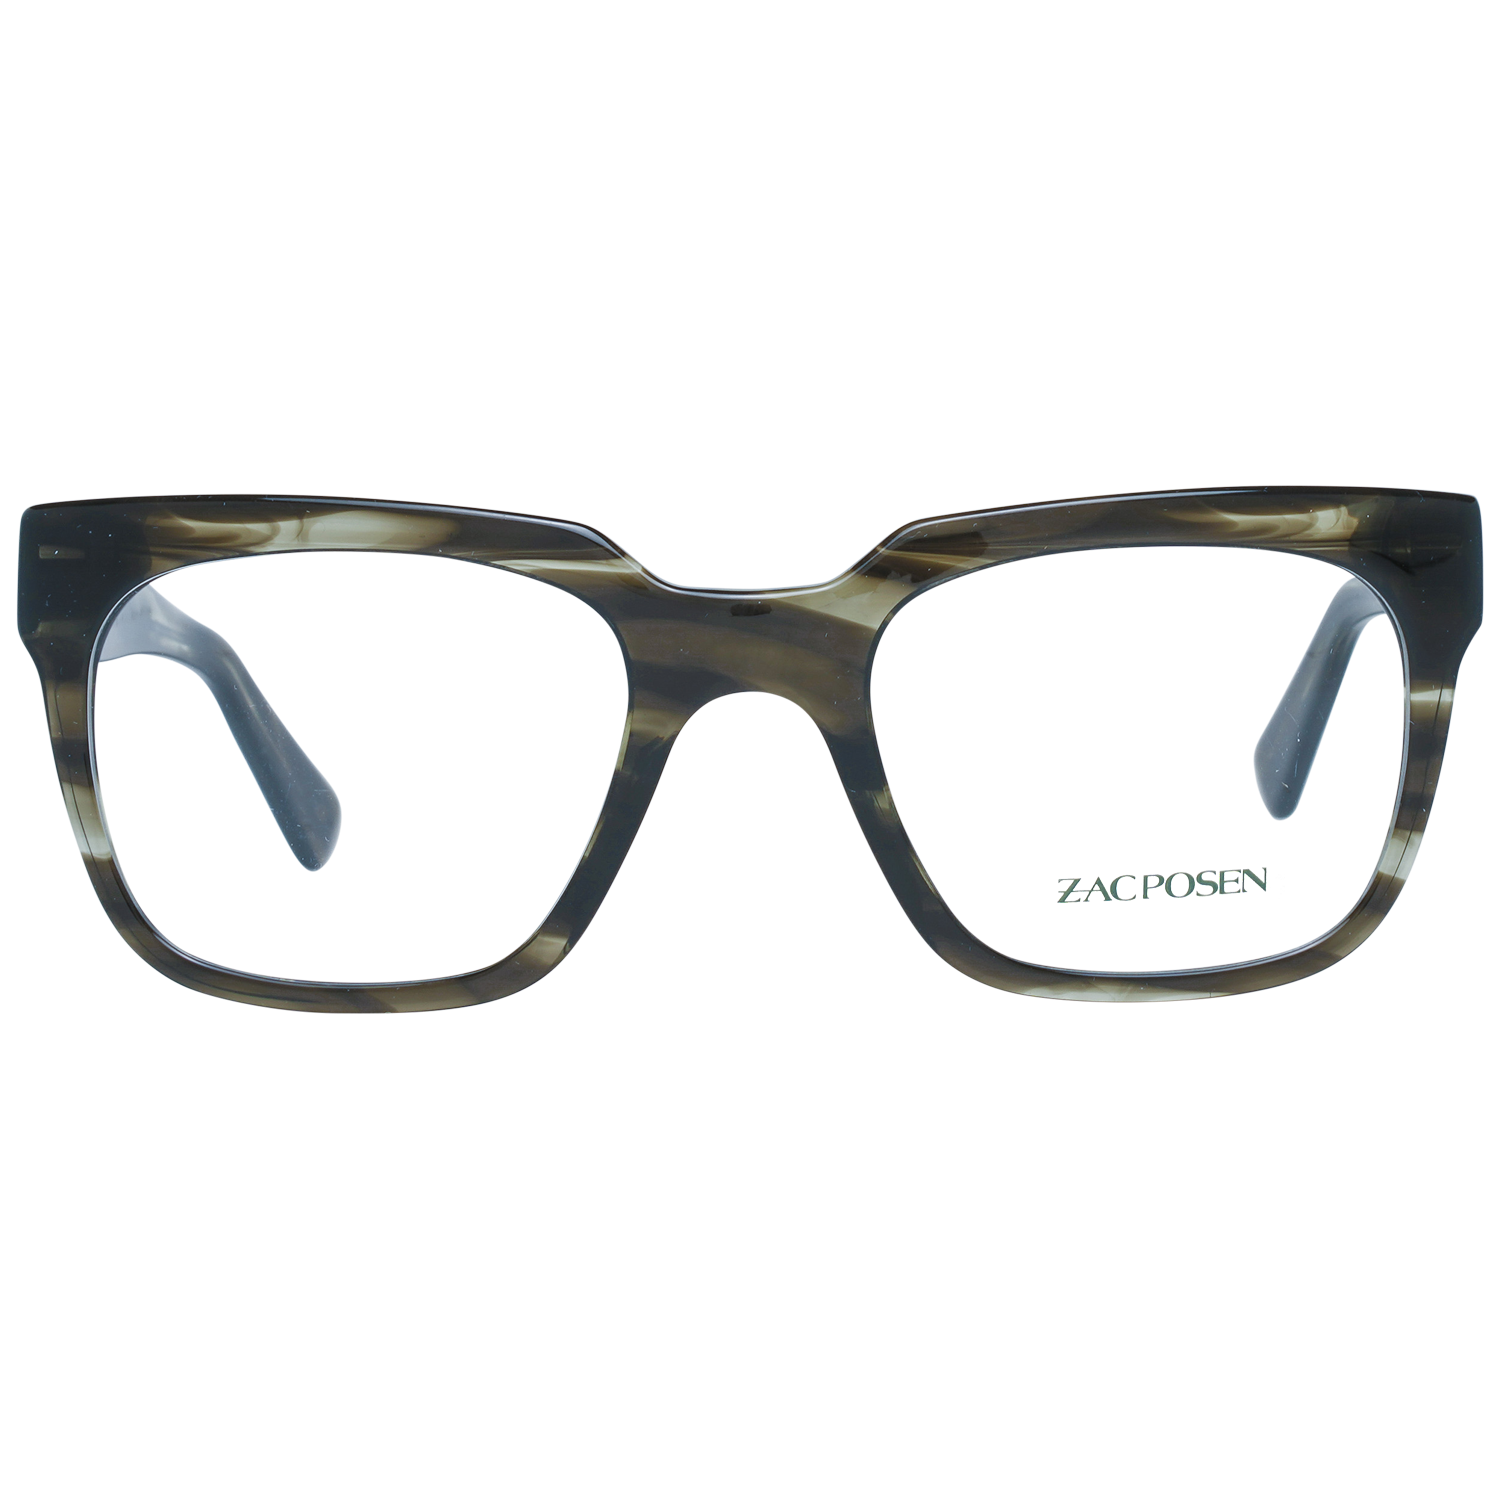 Zac Posen Frames Zac Posen Optical Frame ZVIC GR 49 Victor Eyeglasses Eyewear UK USA Australia 